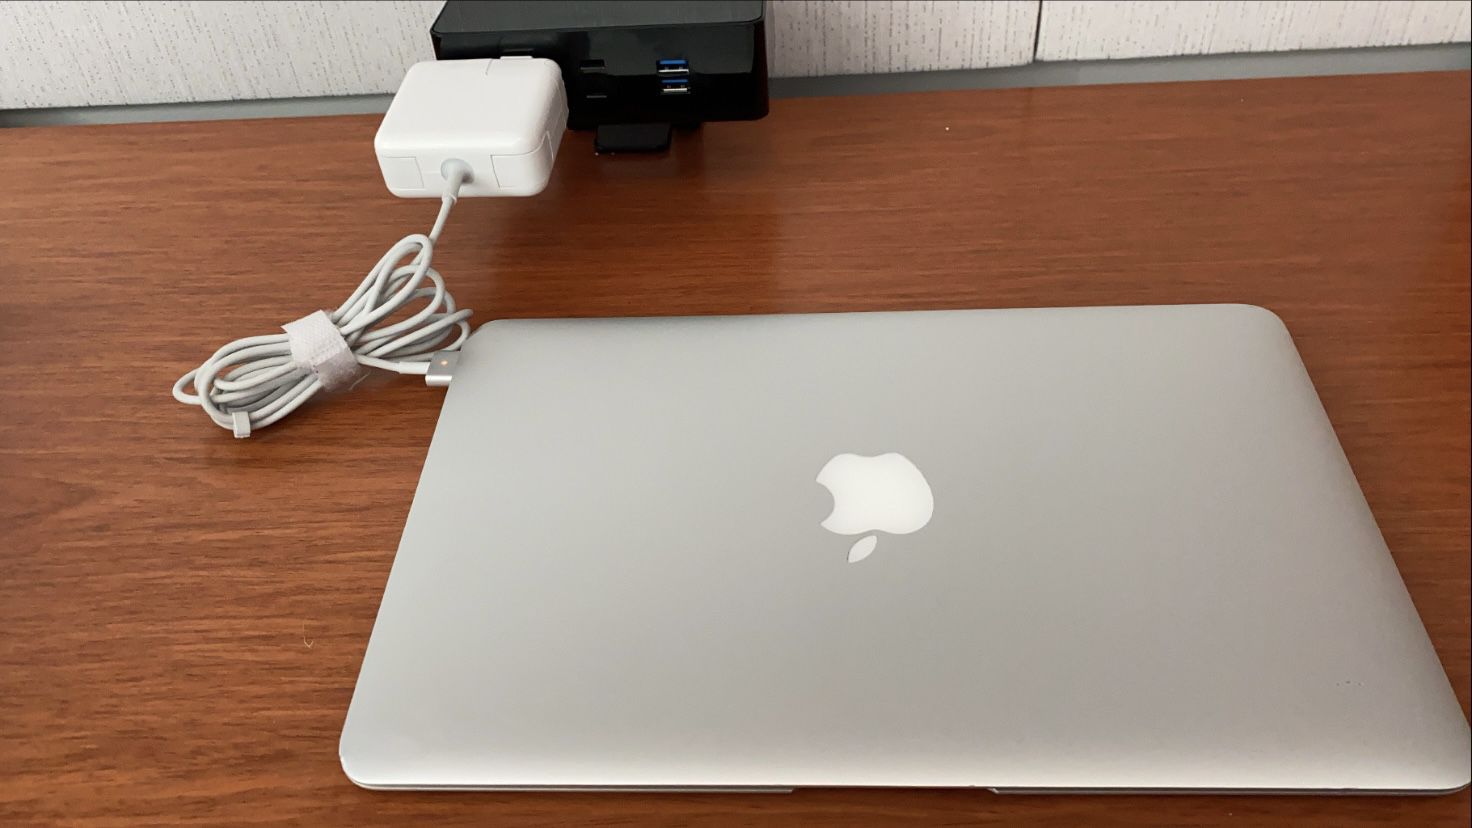 MacBook Air 11 Inch (2014)